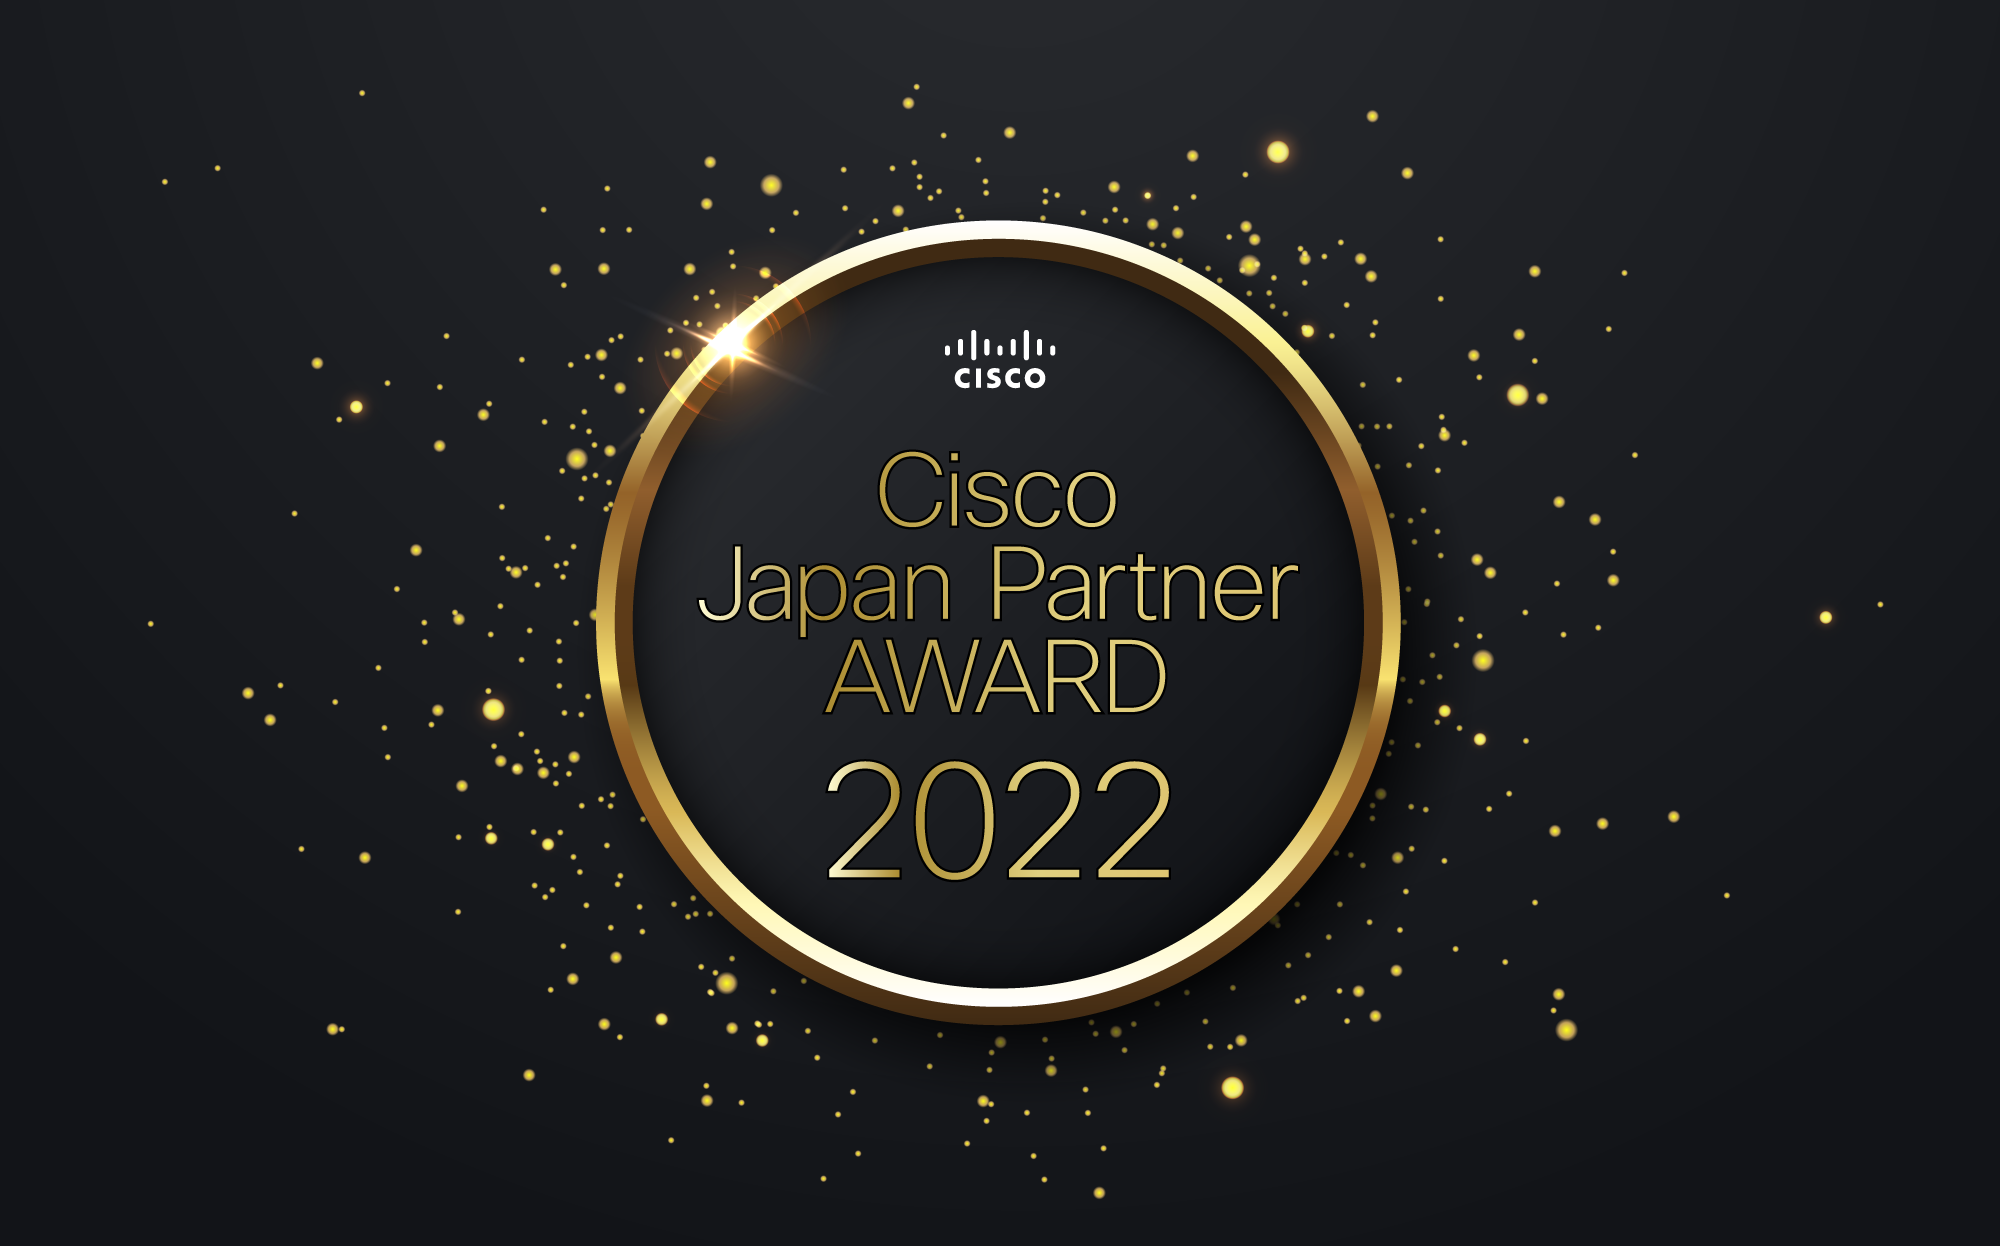 Cisco Japan Partner Award 2022